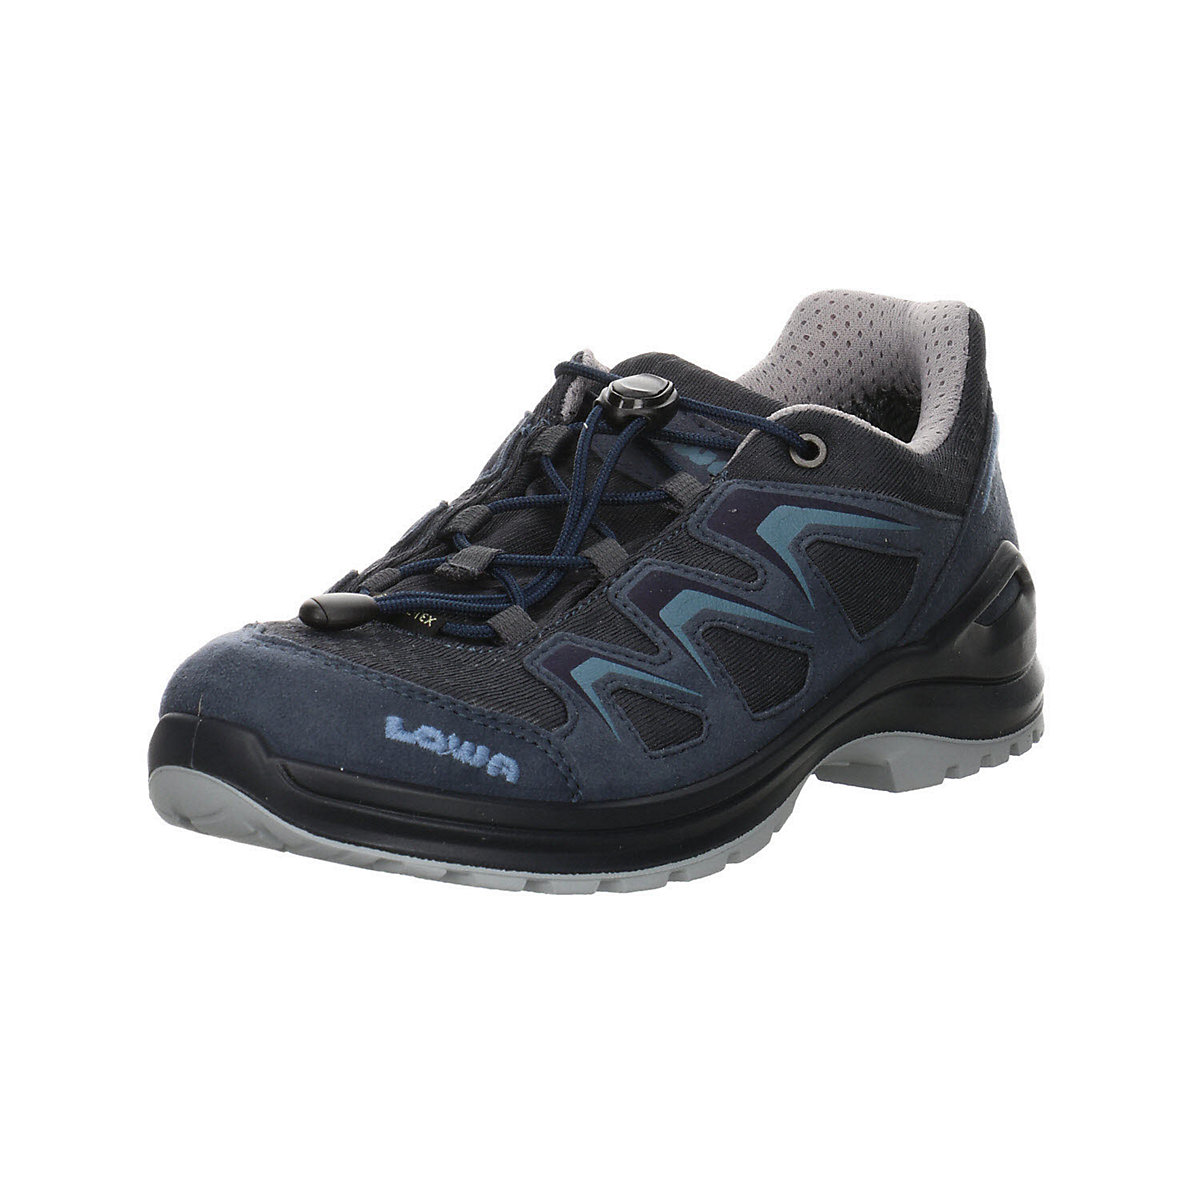 LOWA Boots Innox Evo Gtx junior Trekkingschuh Halbschuhe blau